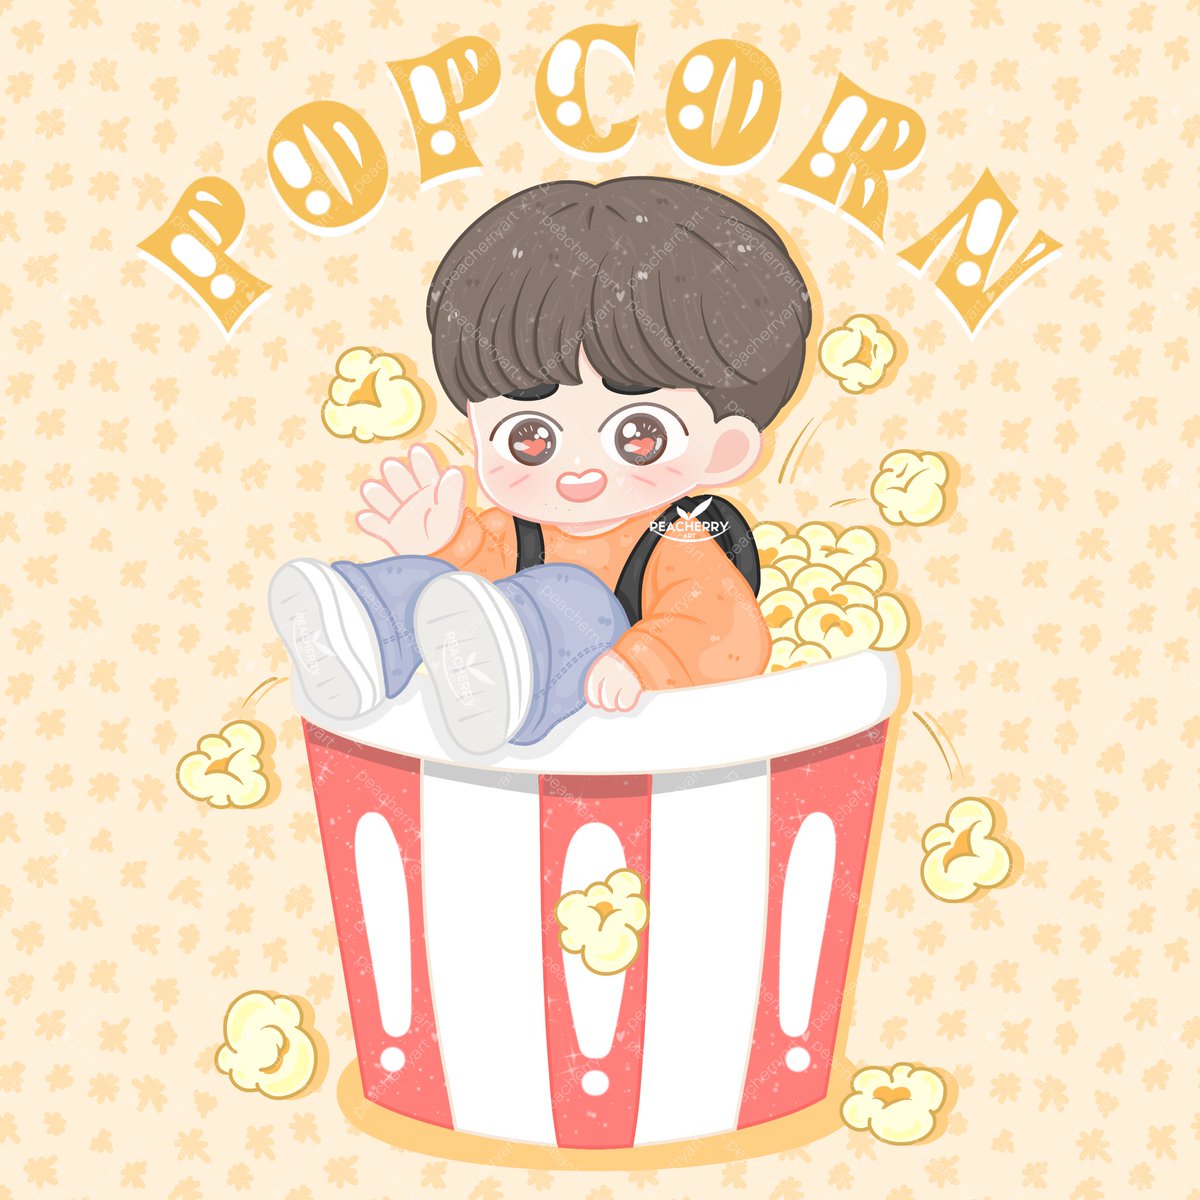 Popcorn 🍿

POPCORN WITH KYUNGSOO 
#POPCORN_OutNow #도경수_성장
#DOHKYUNGSOO_POPCORN
#KYUNGSOO